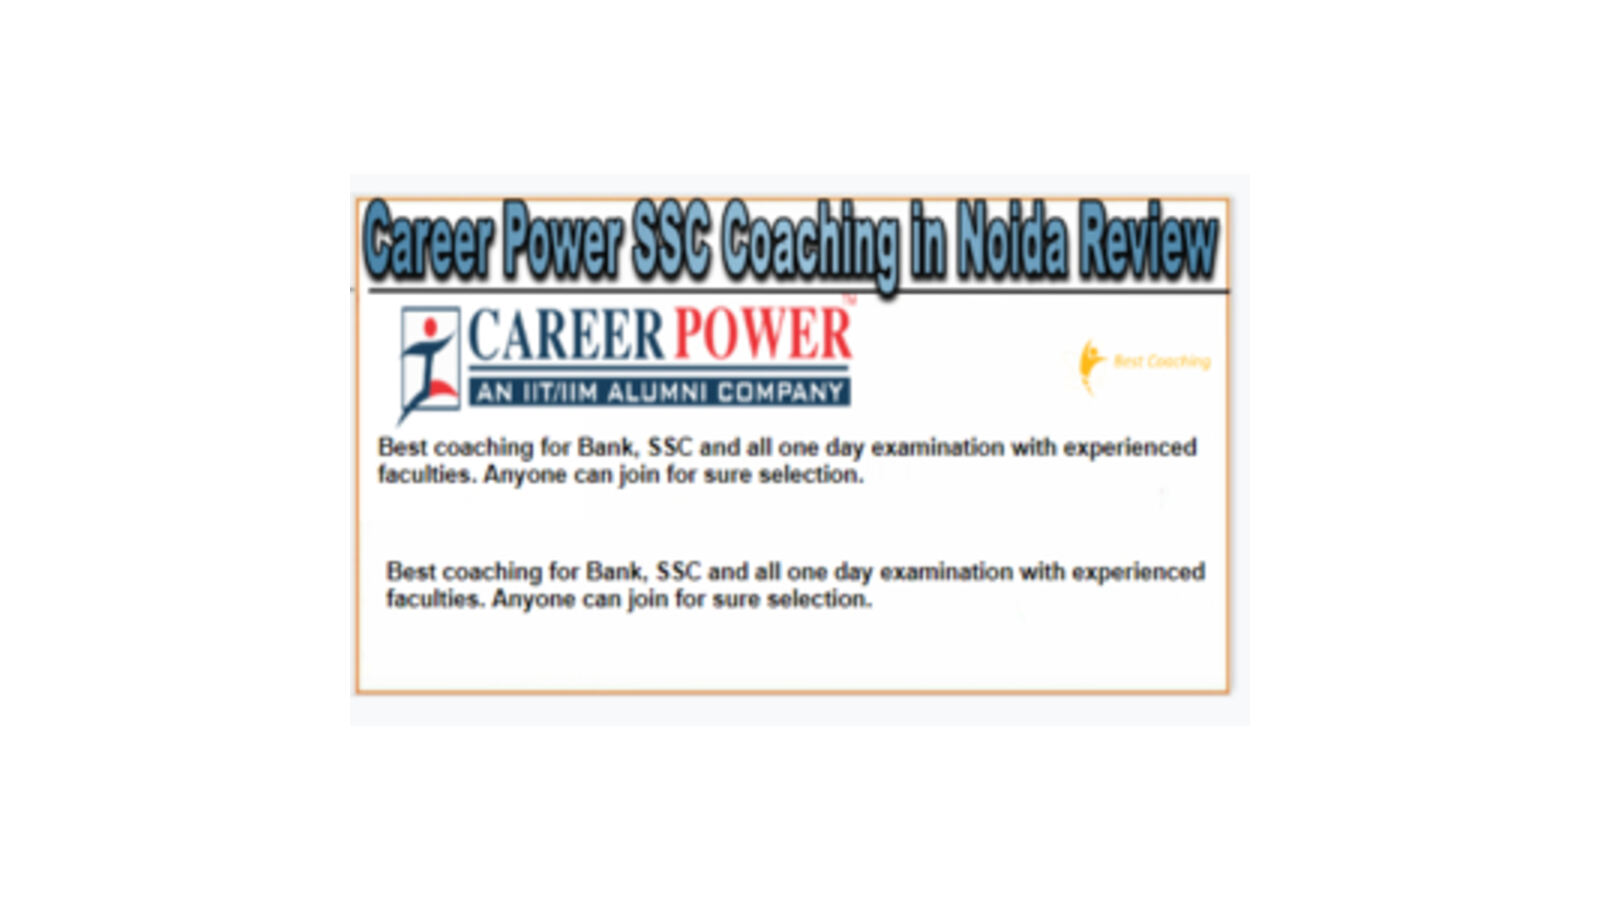 Career Power SSC Coaching in Noida Review